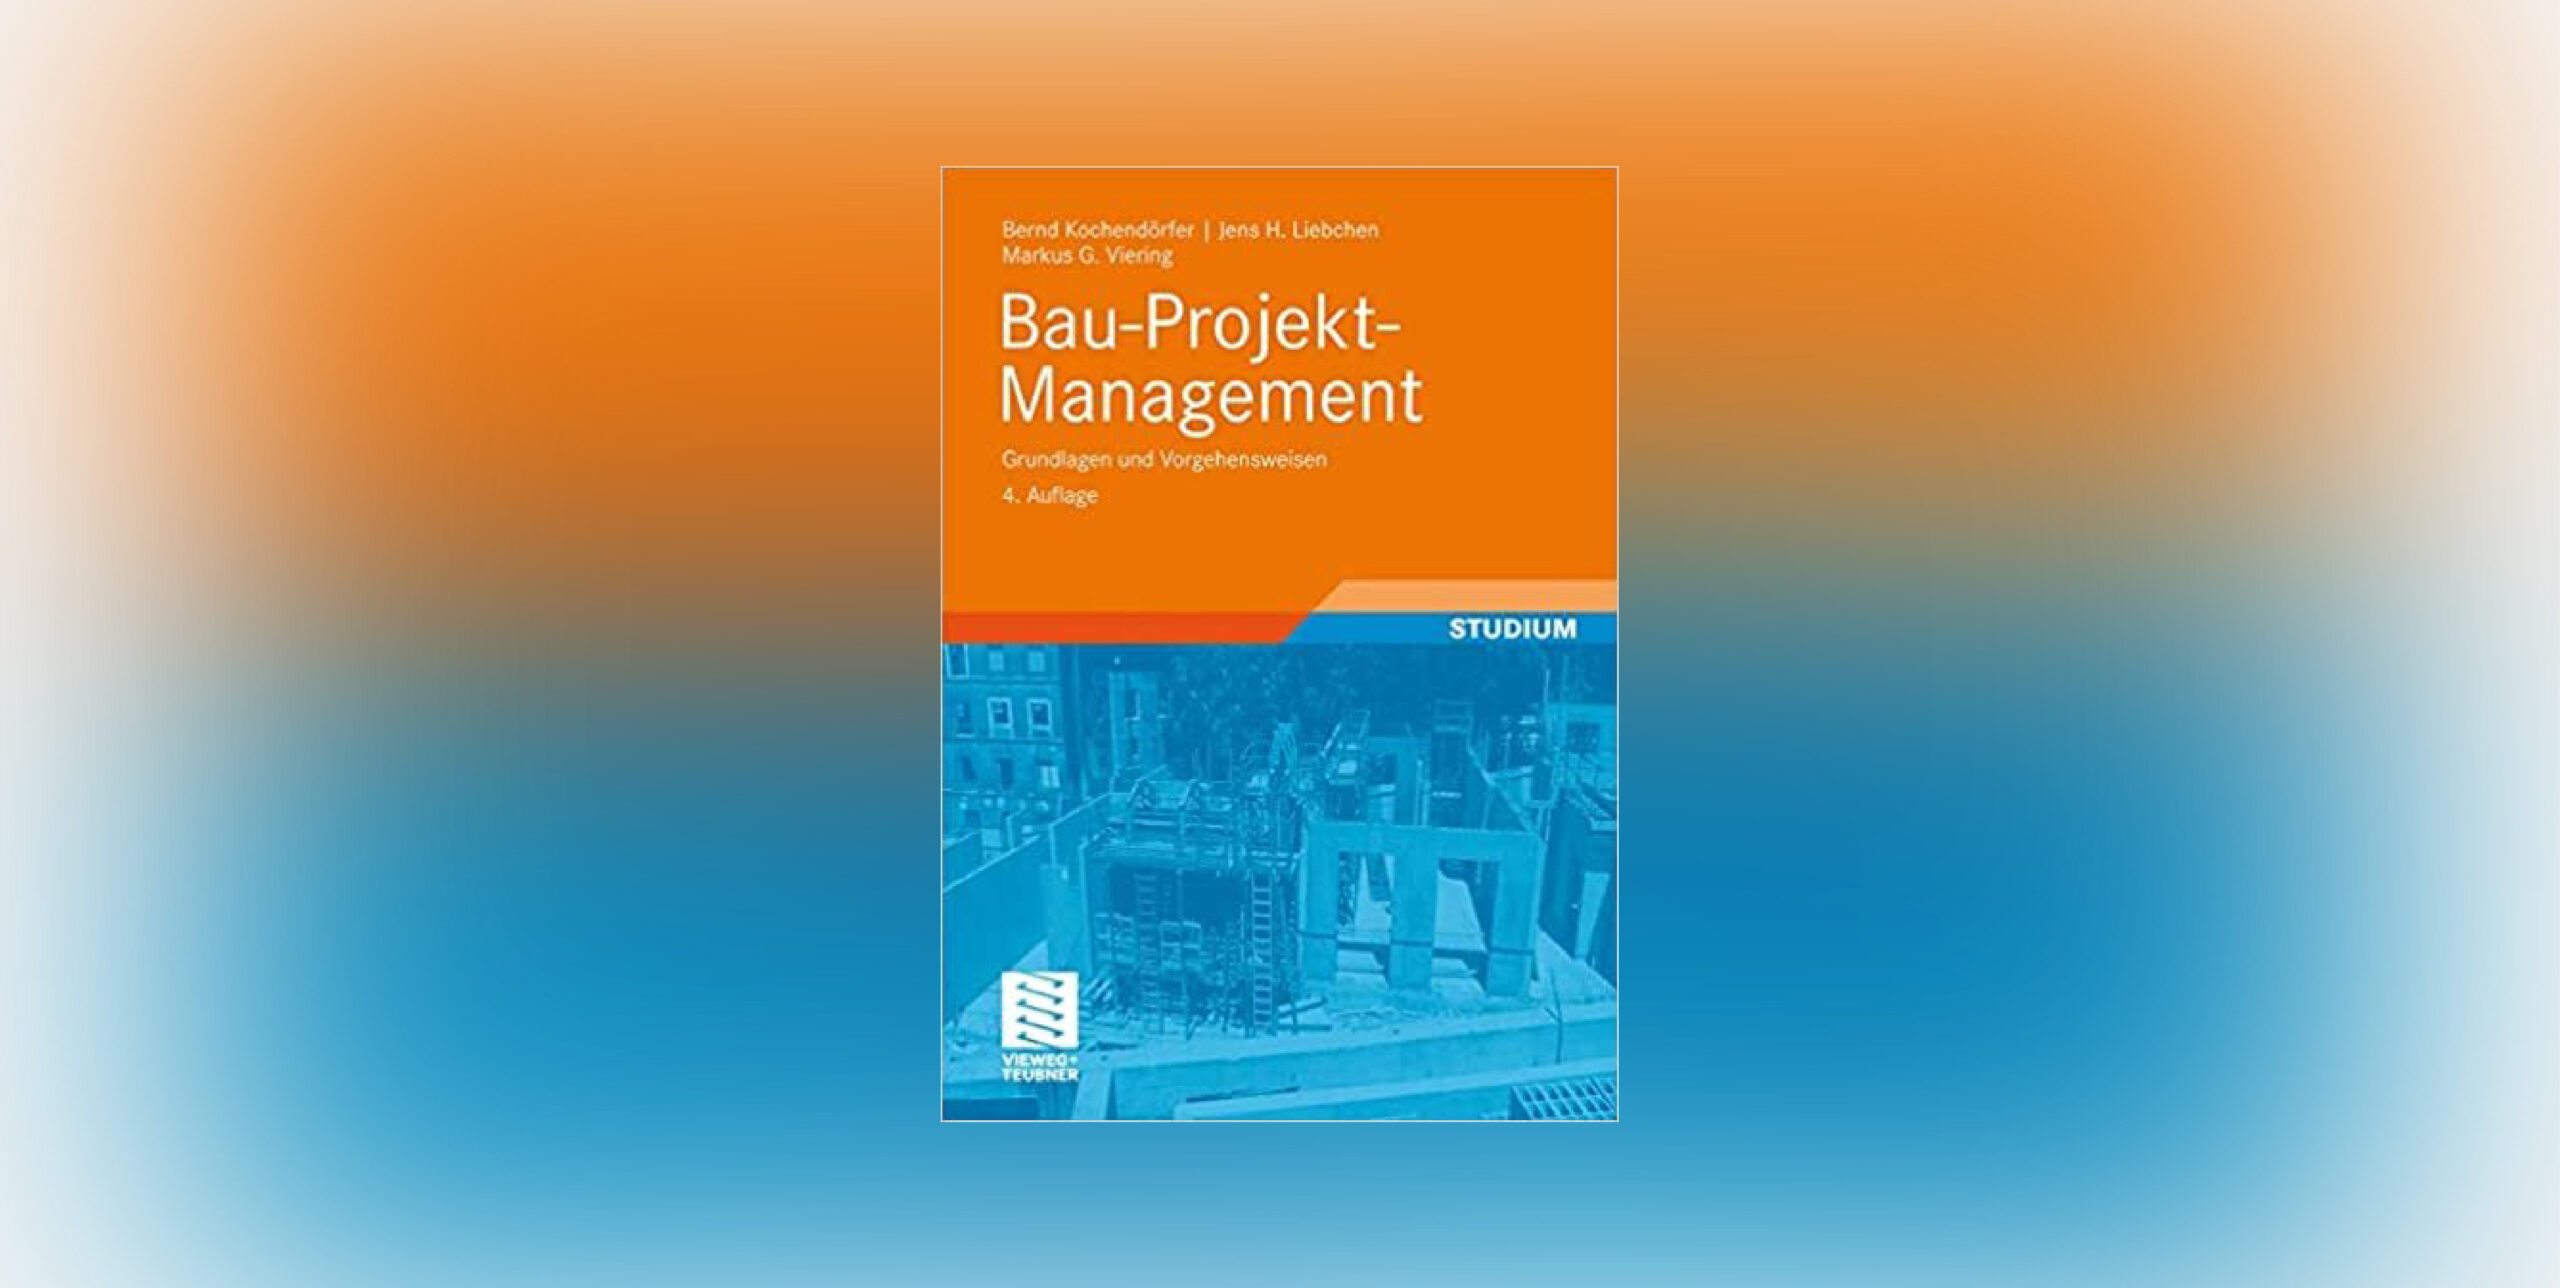 Bau-Projekt-Management on orange background